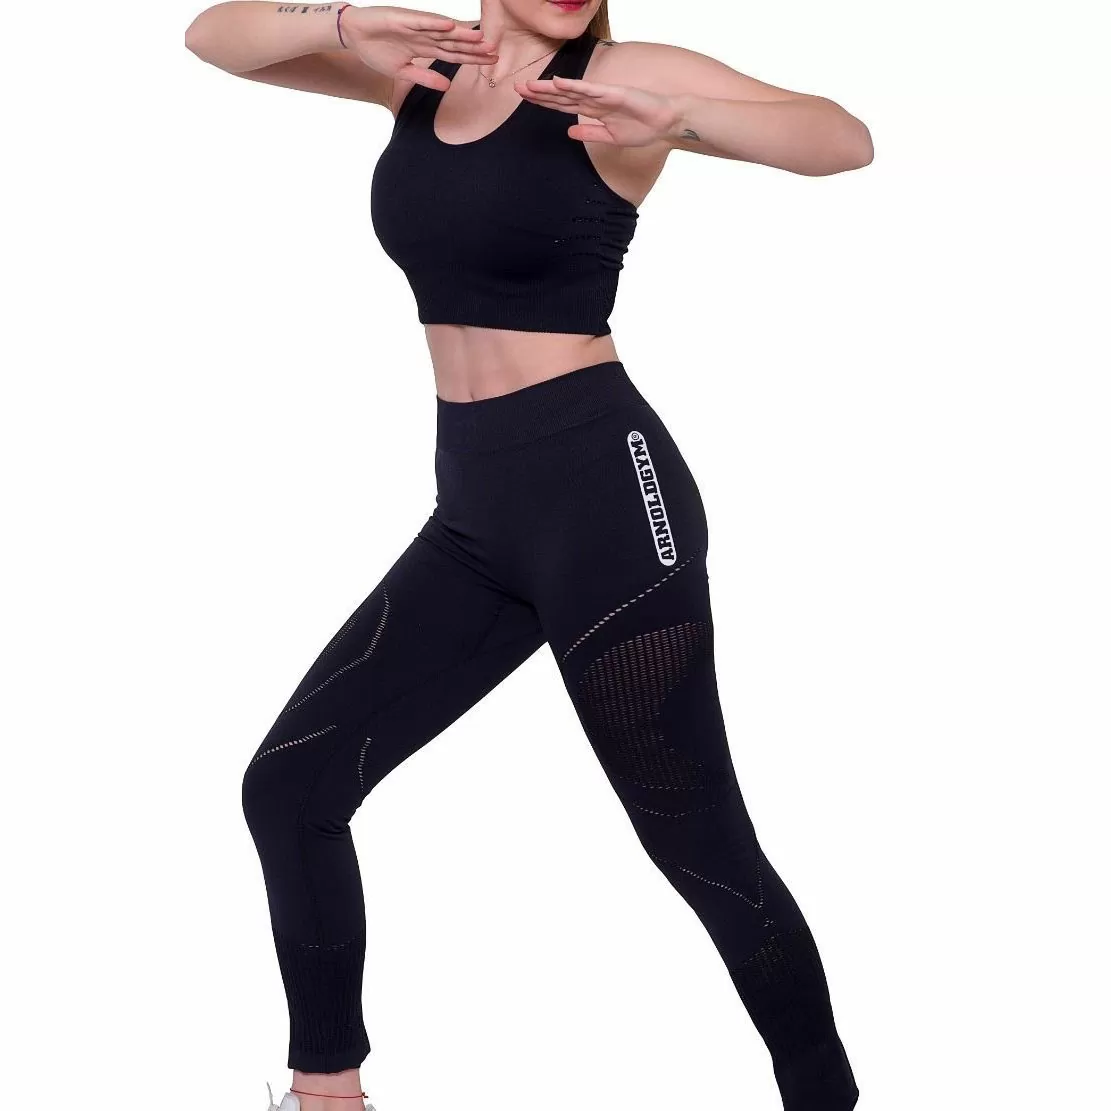 https://www.arnoldgymgear.com/wp-content/uploads/2020/09/0000473_core-seamless-high-waisted-black-leggings.webp